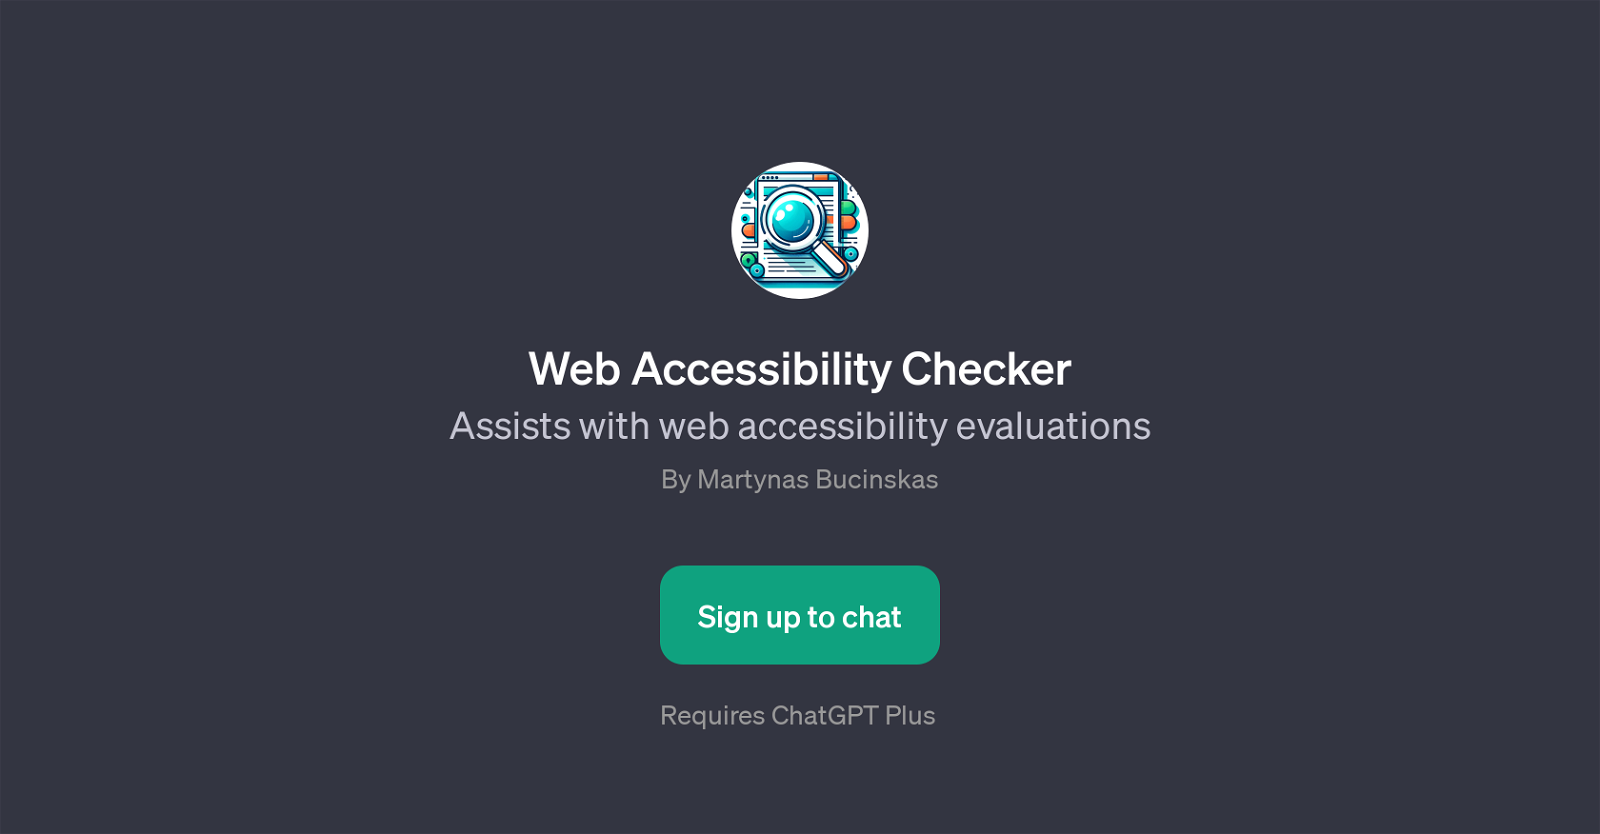 Web Accessibility Checker website